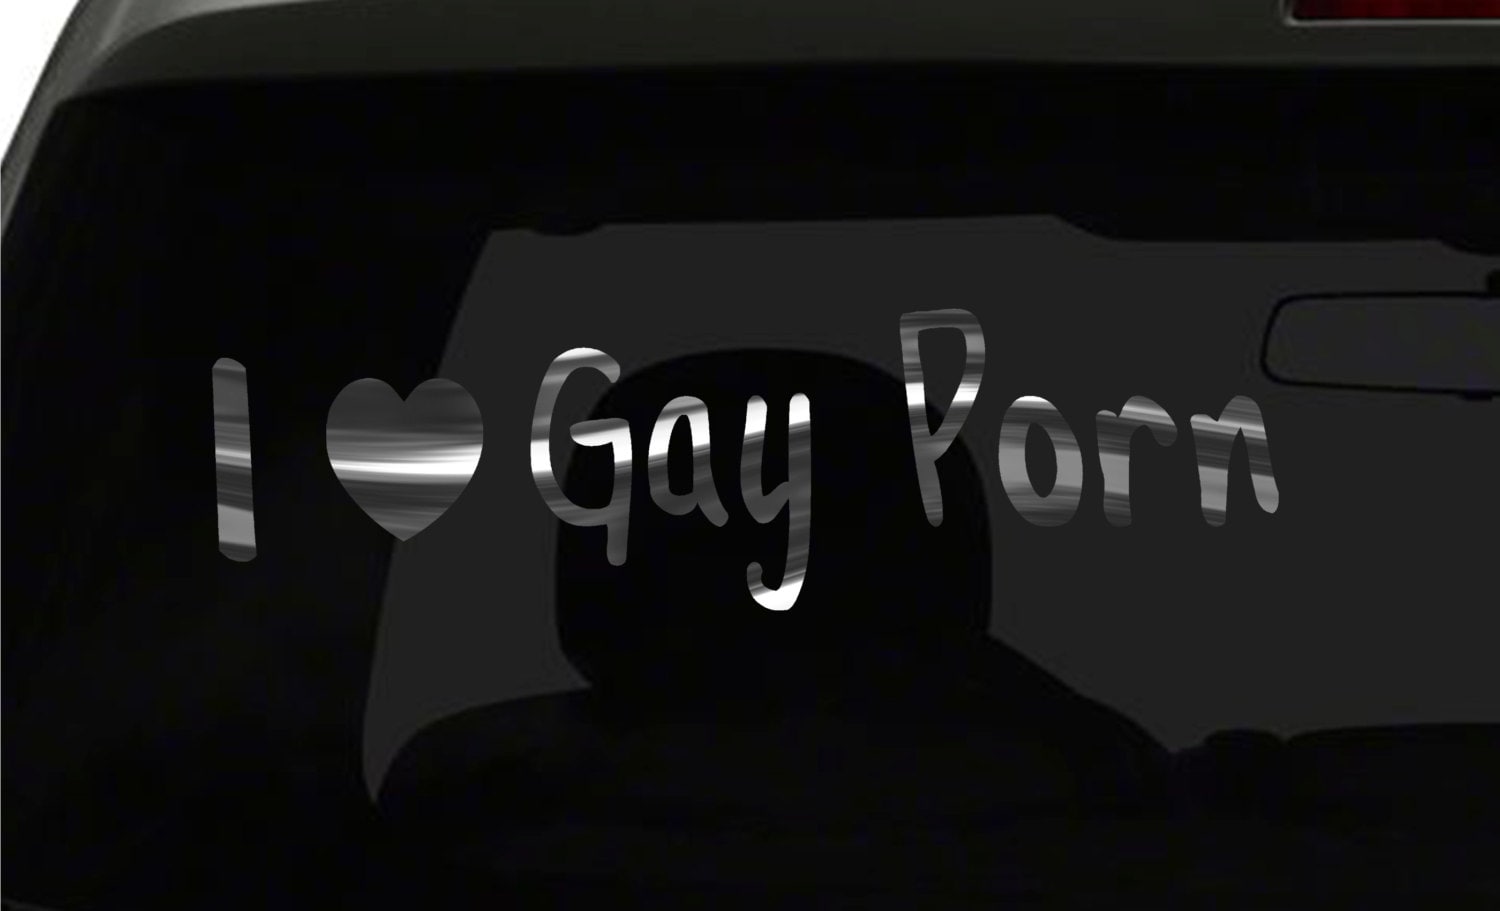 I Love Gay Porn Car Window Laptop Wall Decal Sticker